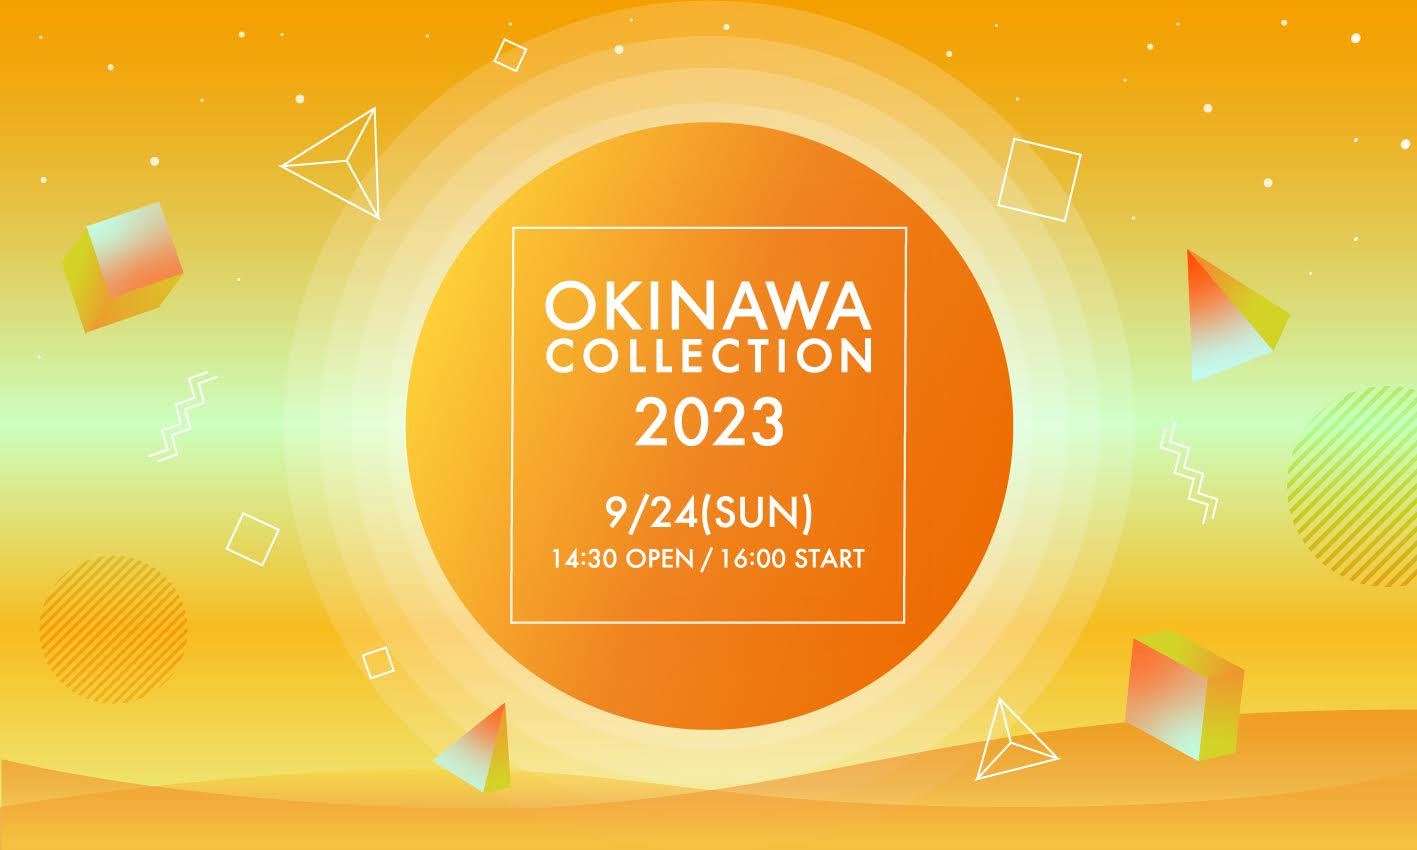 『OKINAWA COLLECTION 2023』